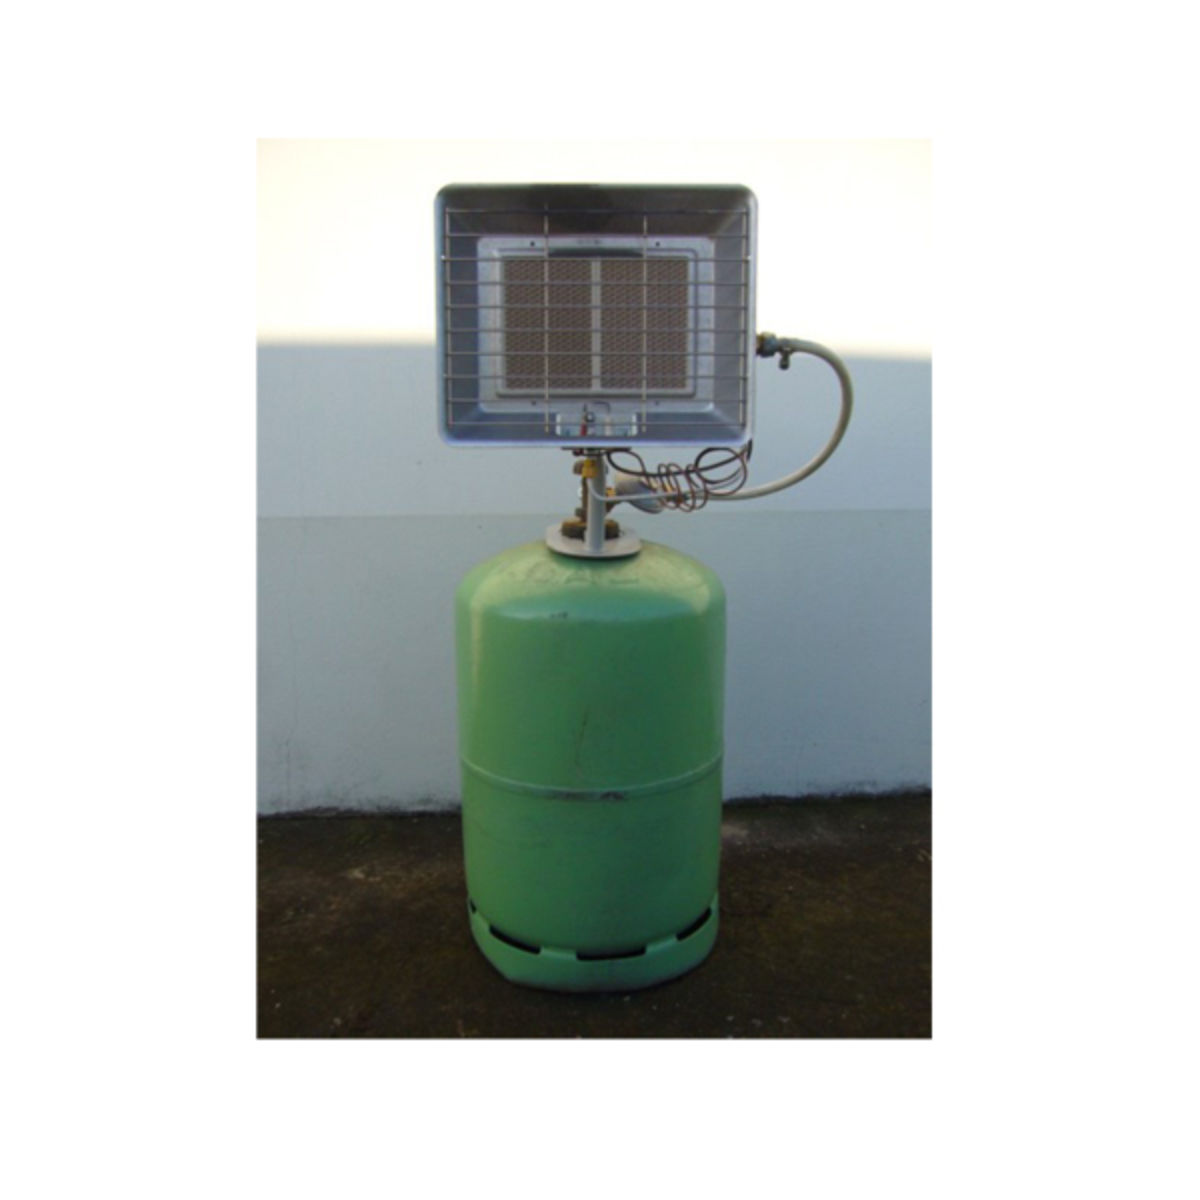 RGT 40 I radiant gaz mobile au propane ou butane